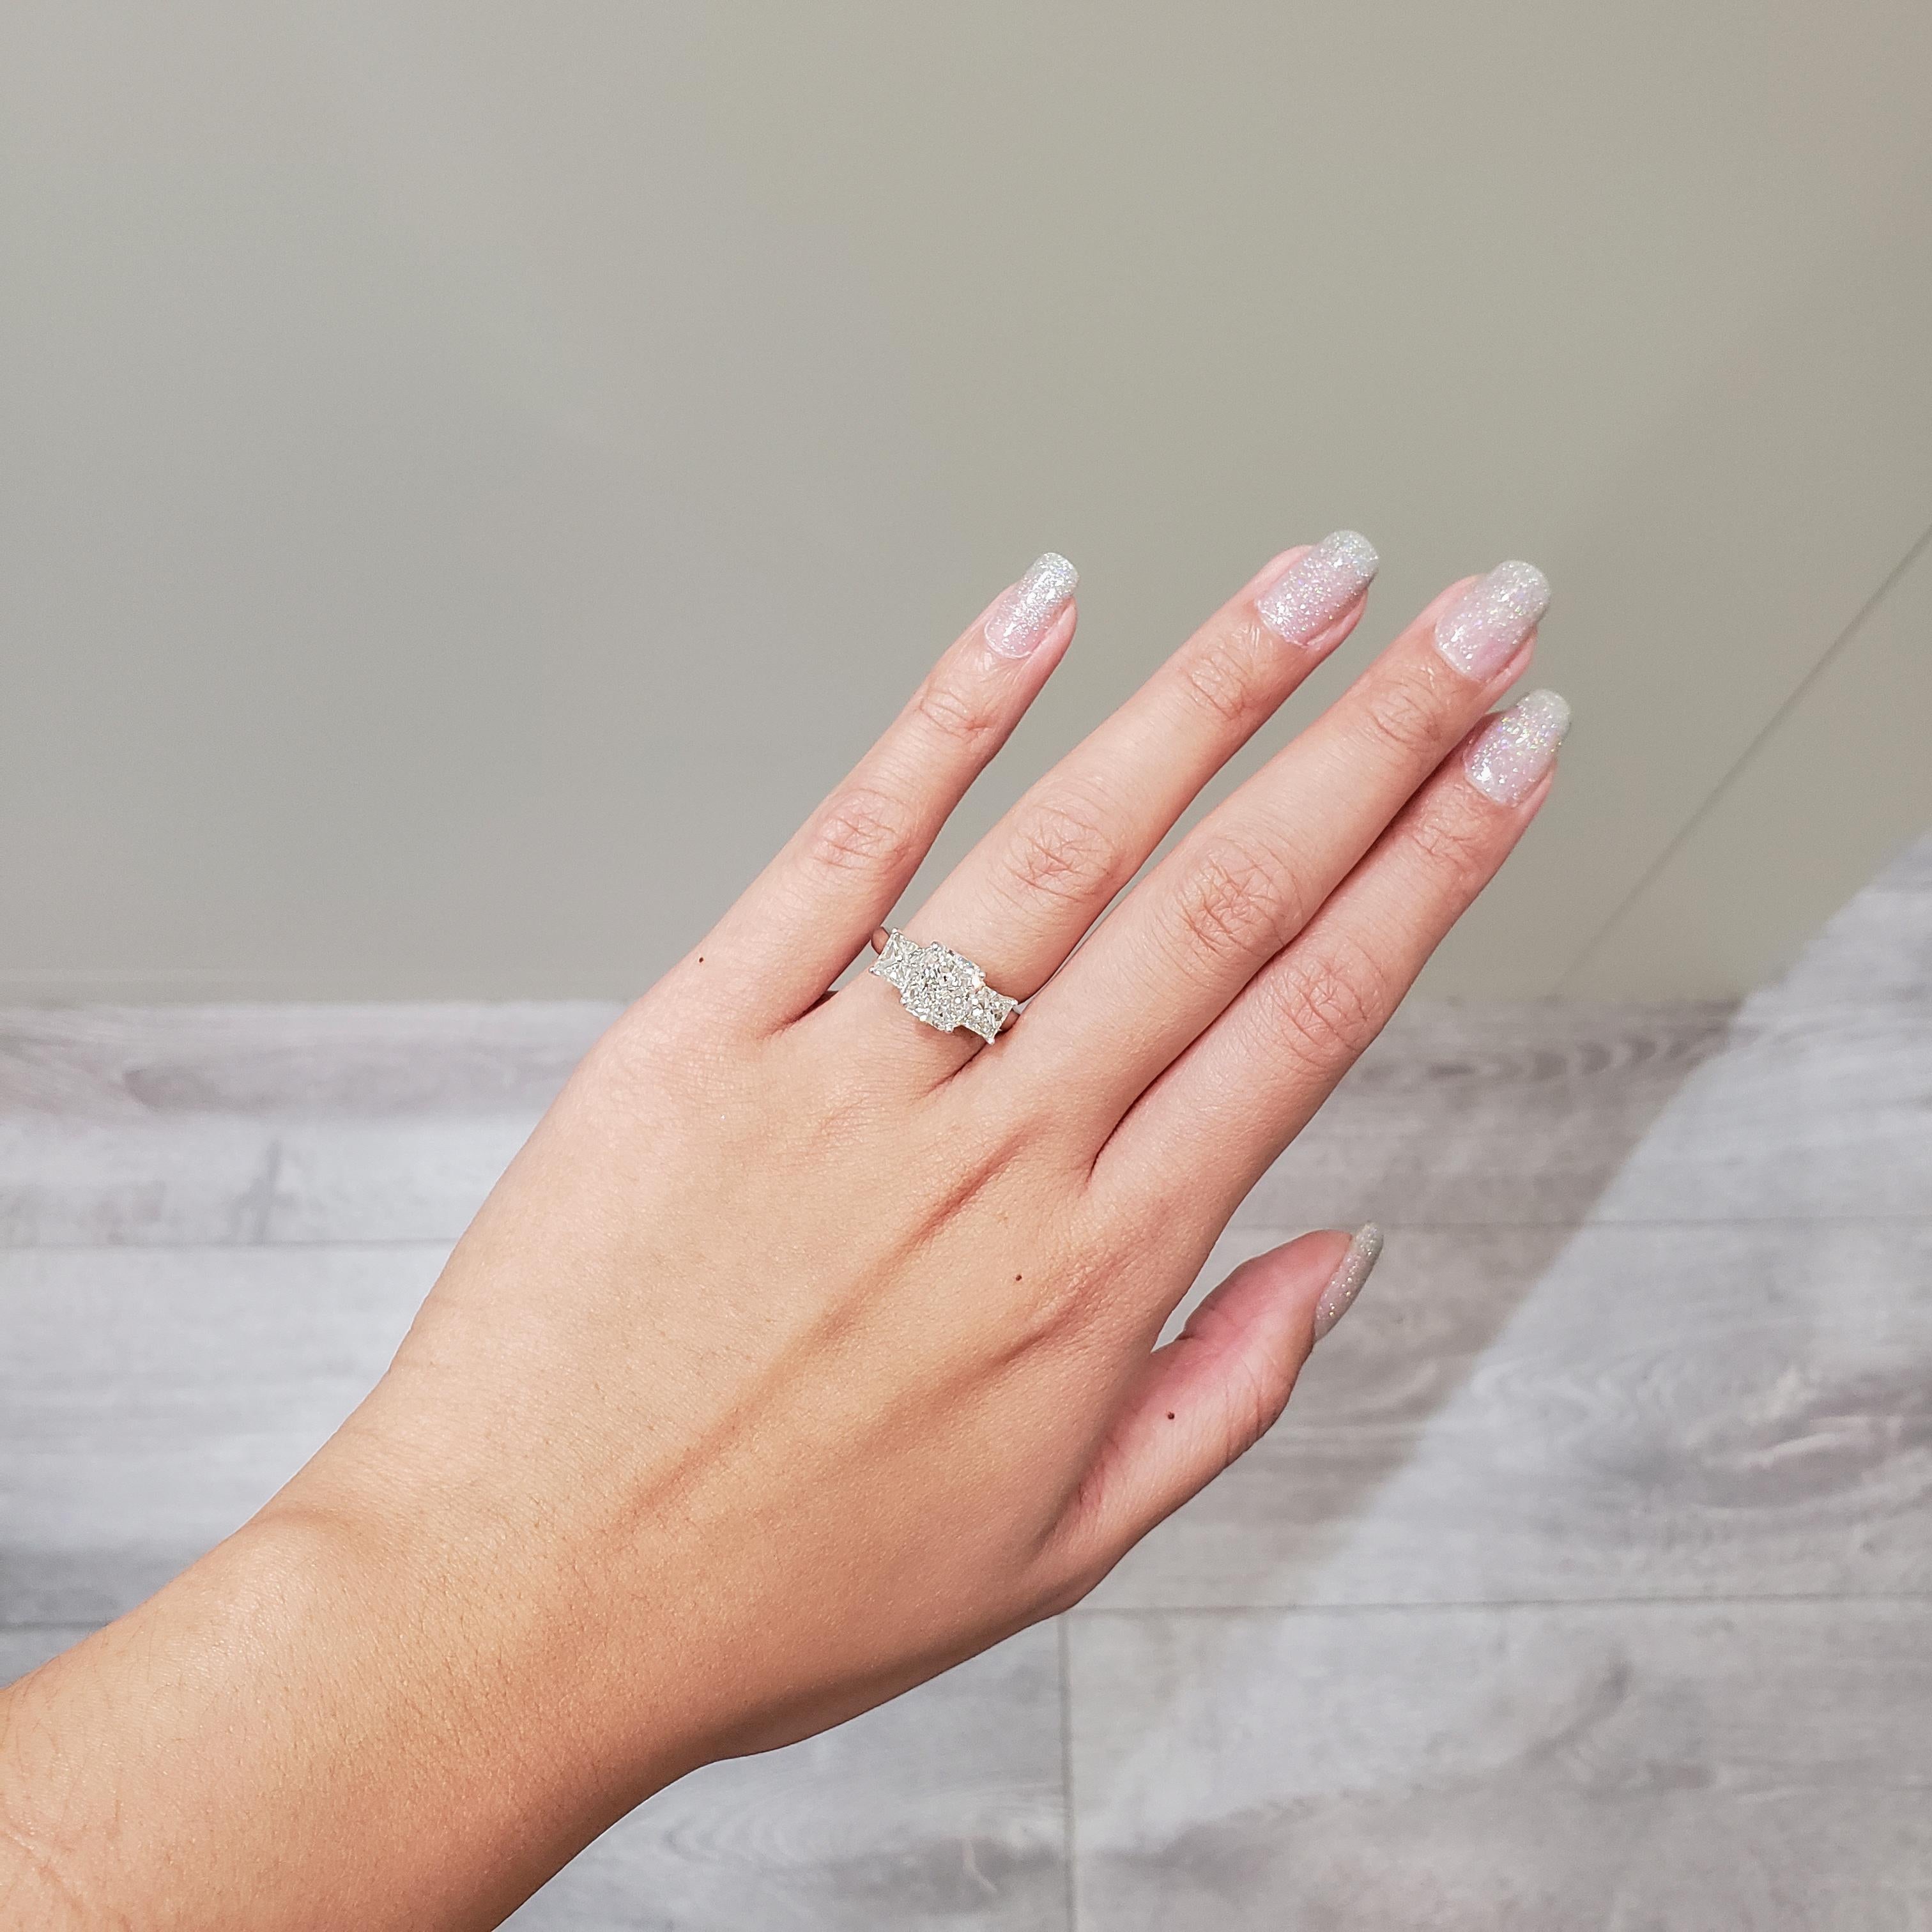 3 carat radiant cut diamond ring price